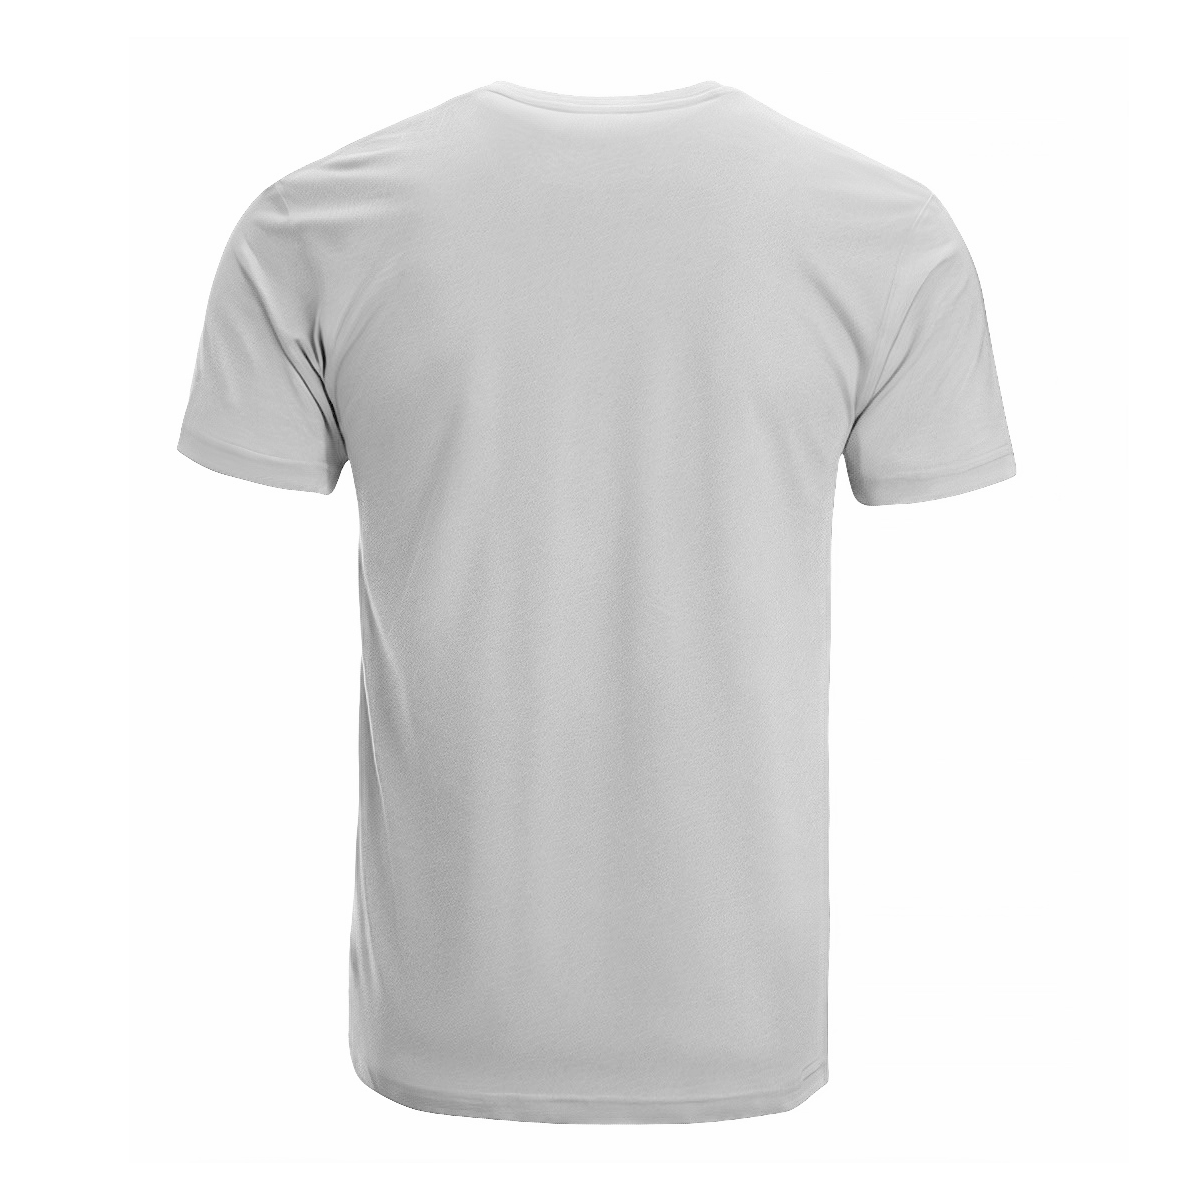 Haliburton Tartan Crest T-shirt - I'm not yelling style